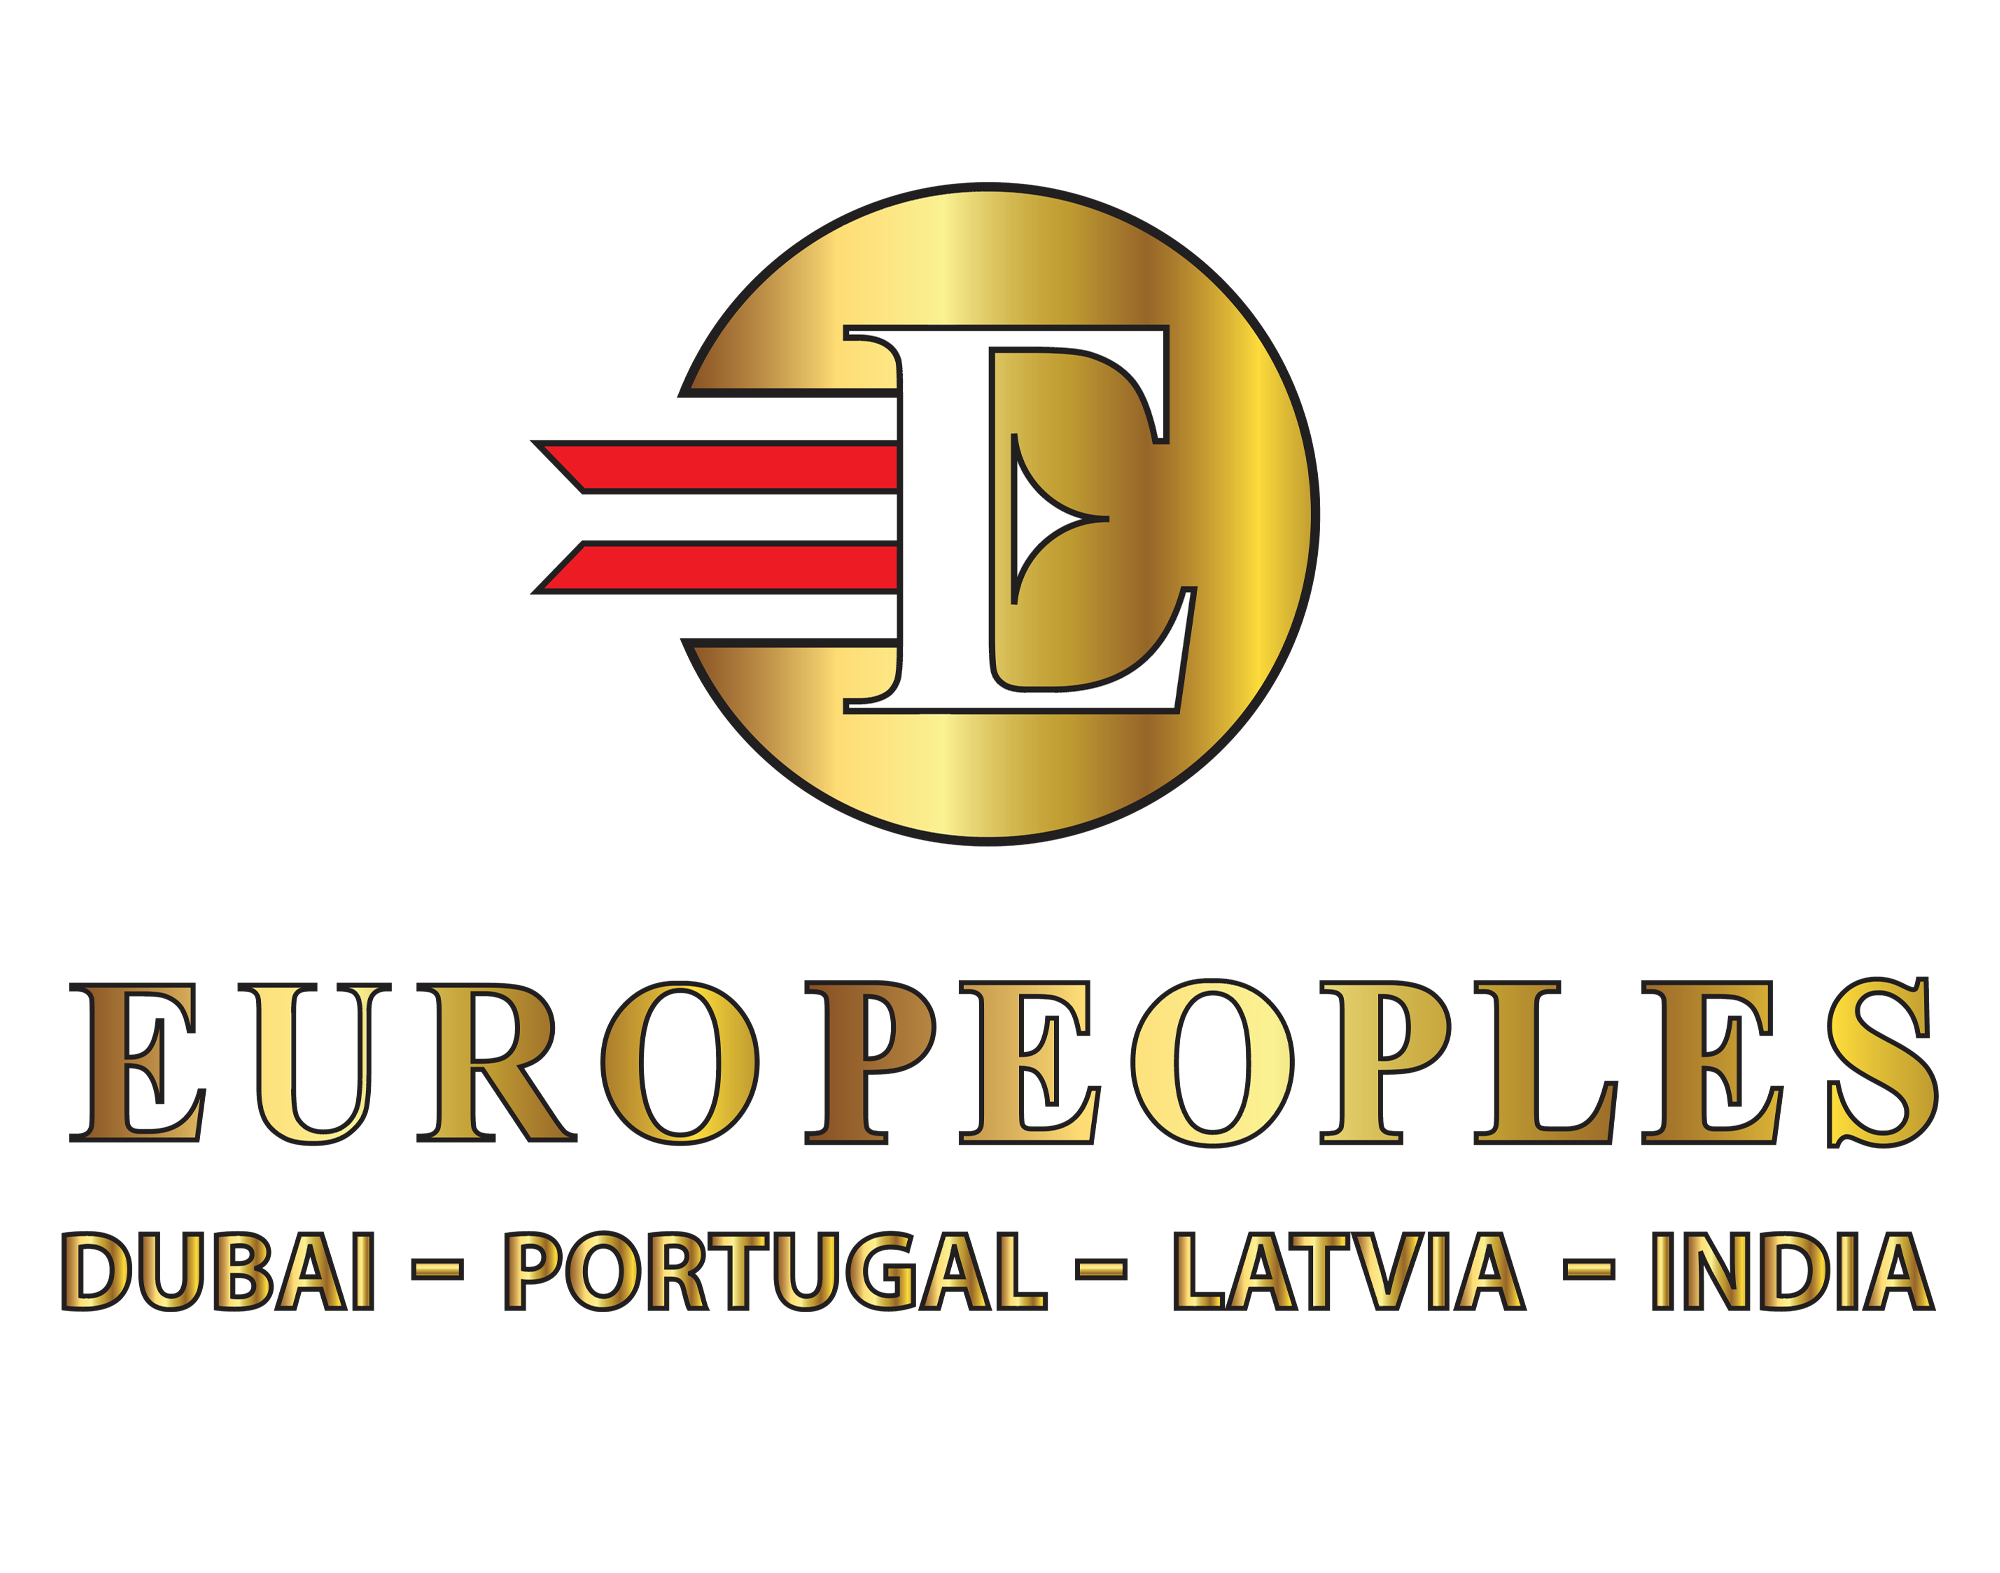 Euro peoples 